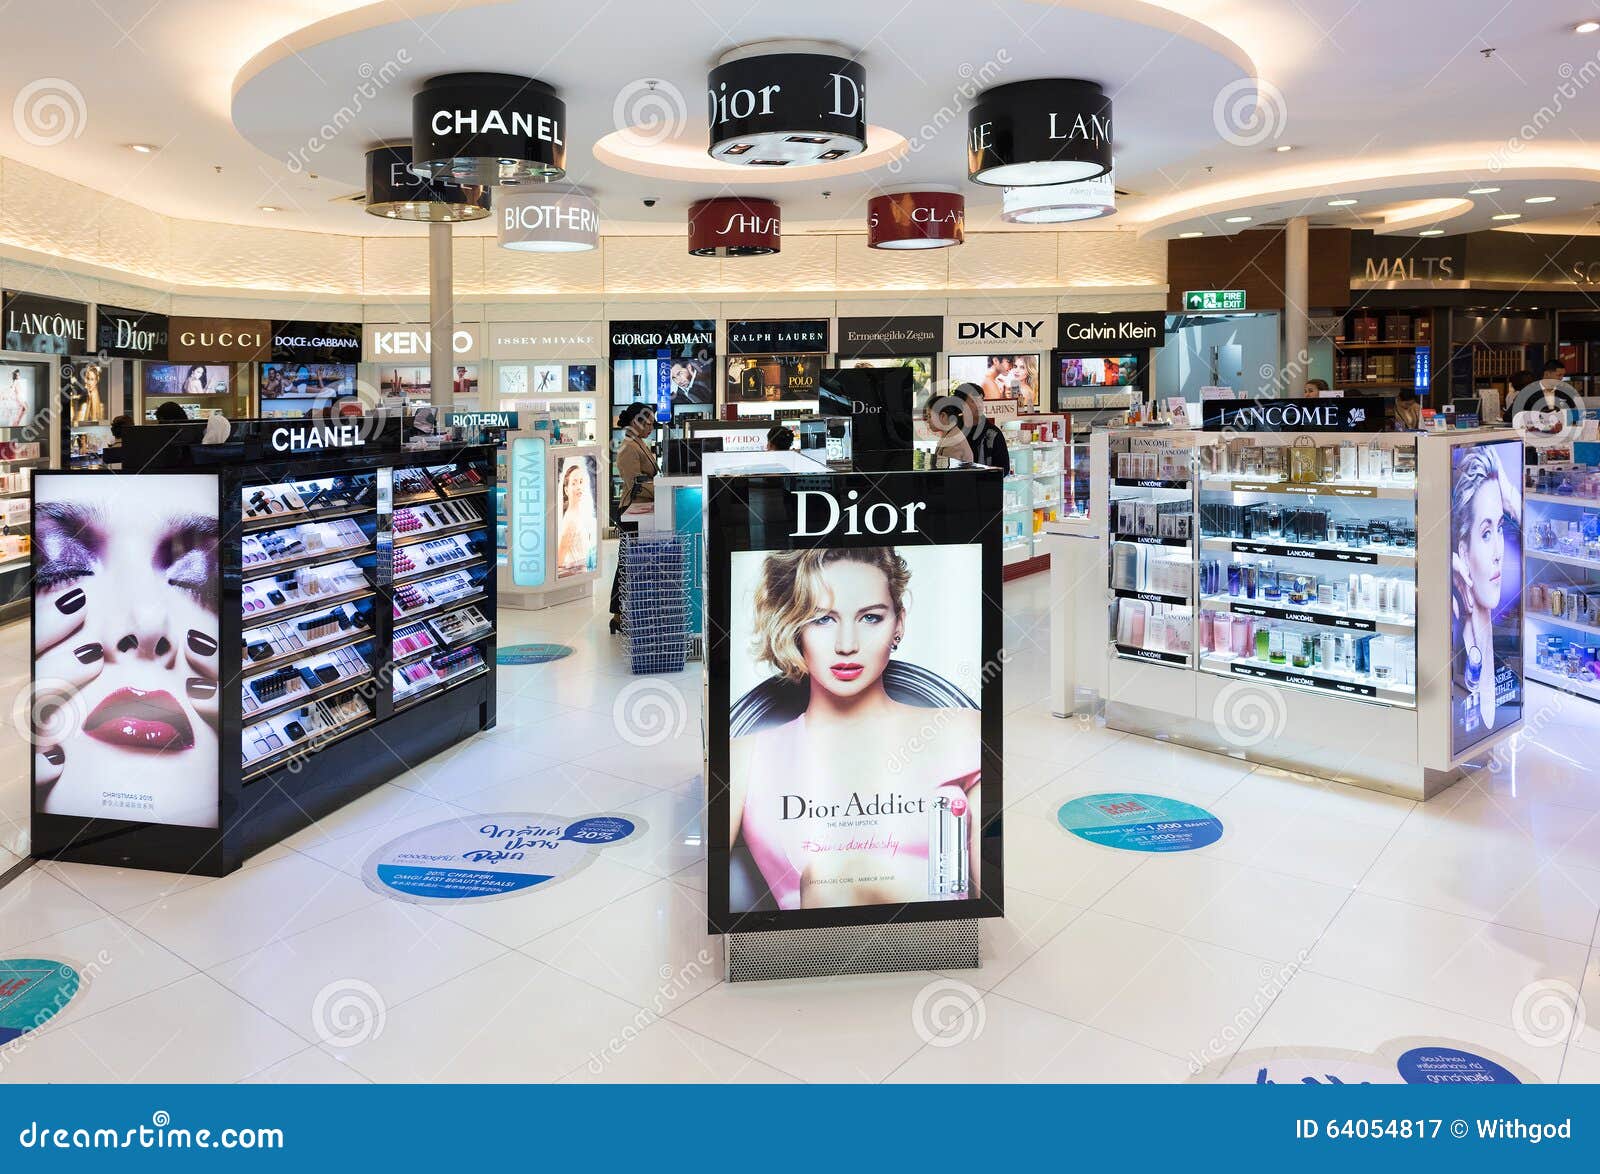 Rettidig Forhåbentlig Tegne Suvarnabhumi Airport Gucci Shop Photos - Free & Royalty-Free Stock Photos  from Dreamstime